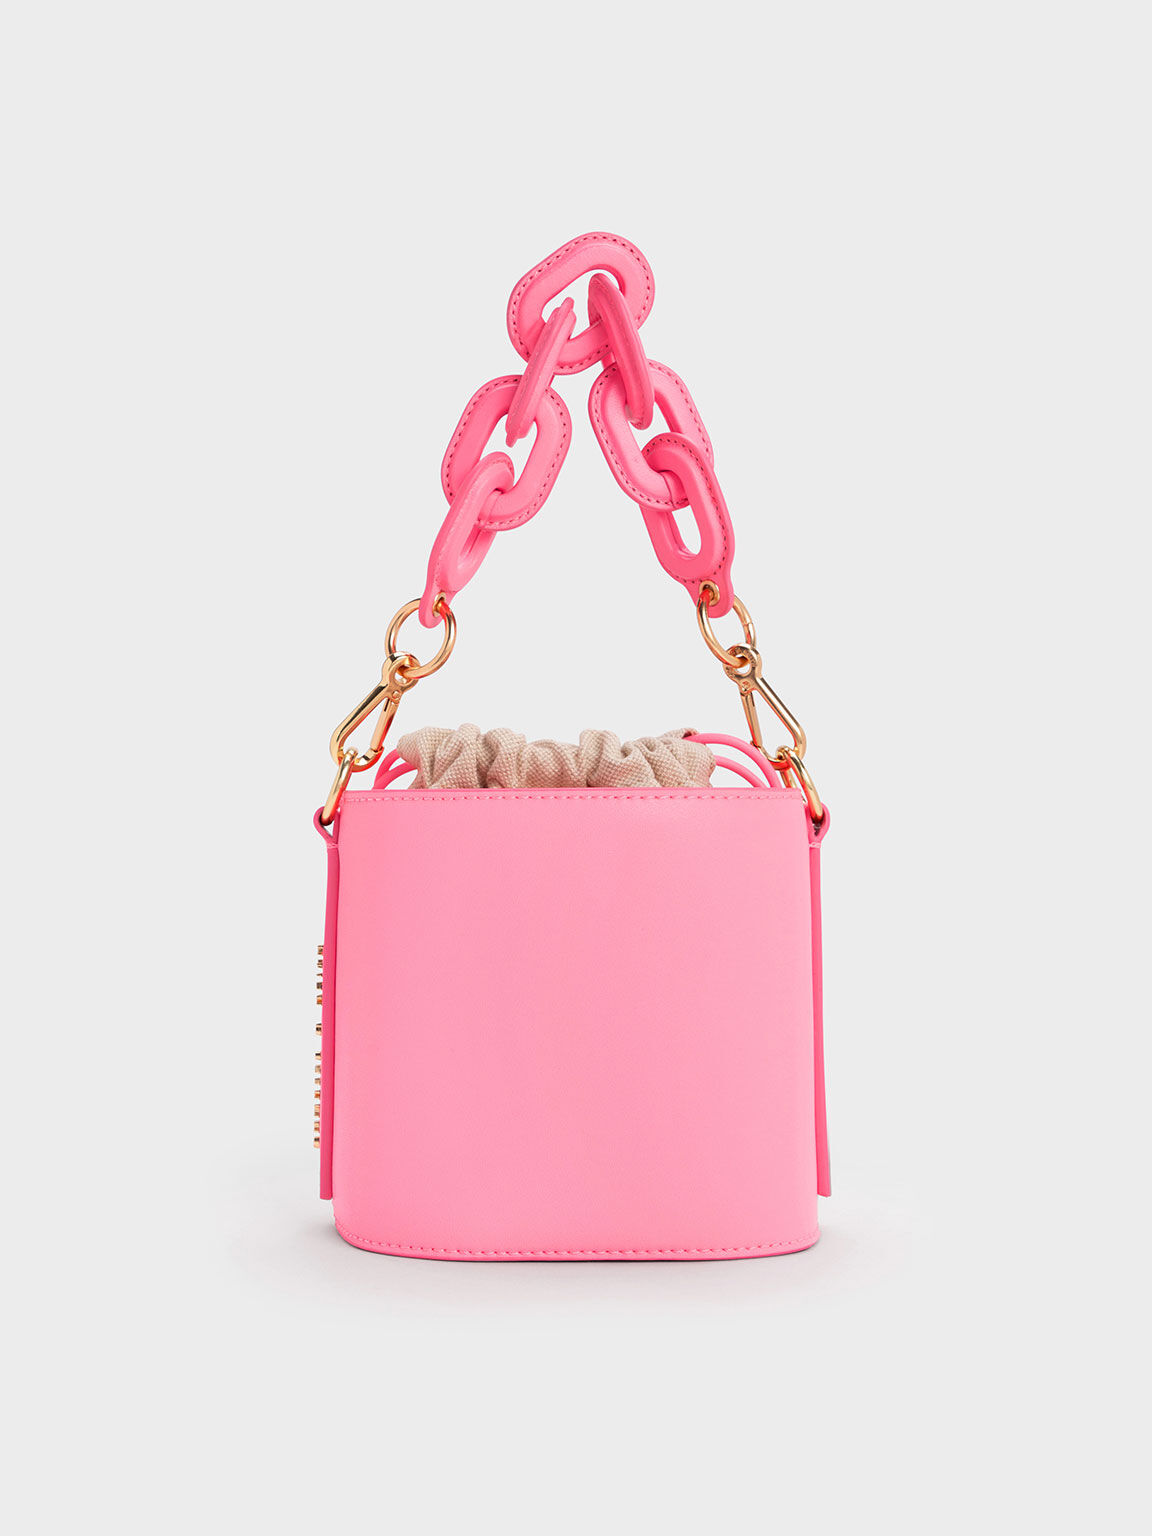 Pu Leather Adjustable Women Girls Trendy Stylish Handbag Bag, 300 Gram,  Size: 24*11*